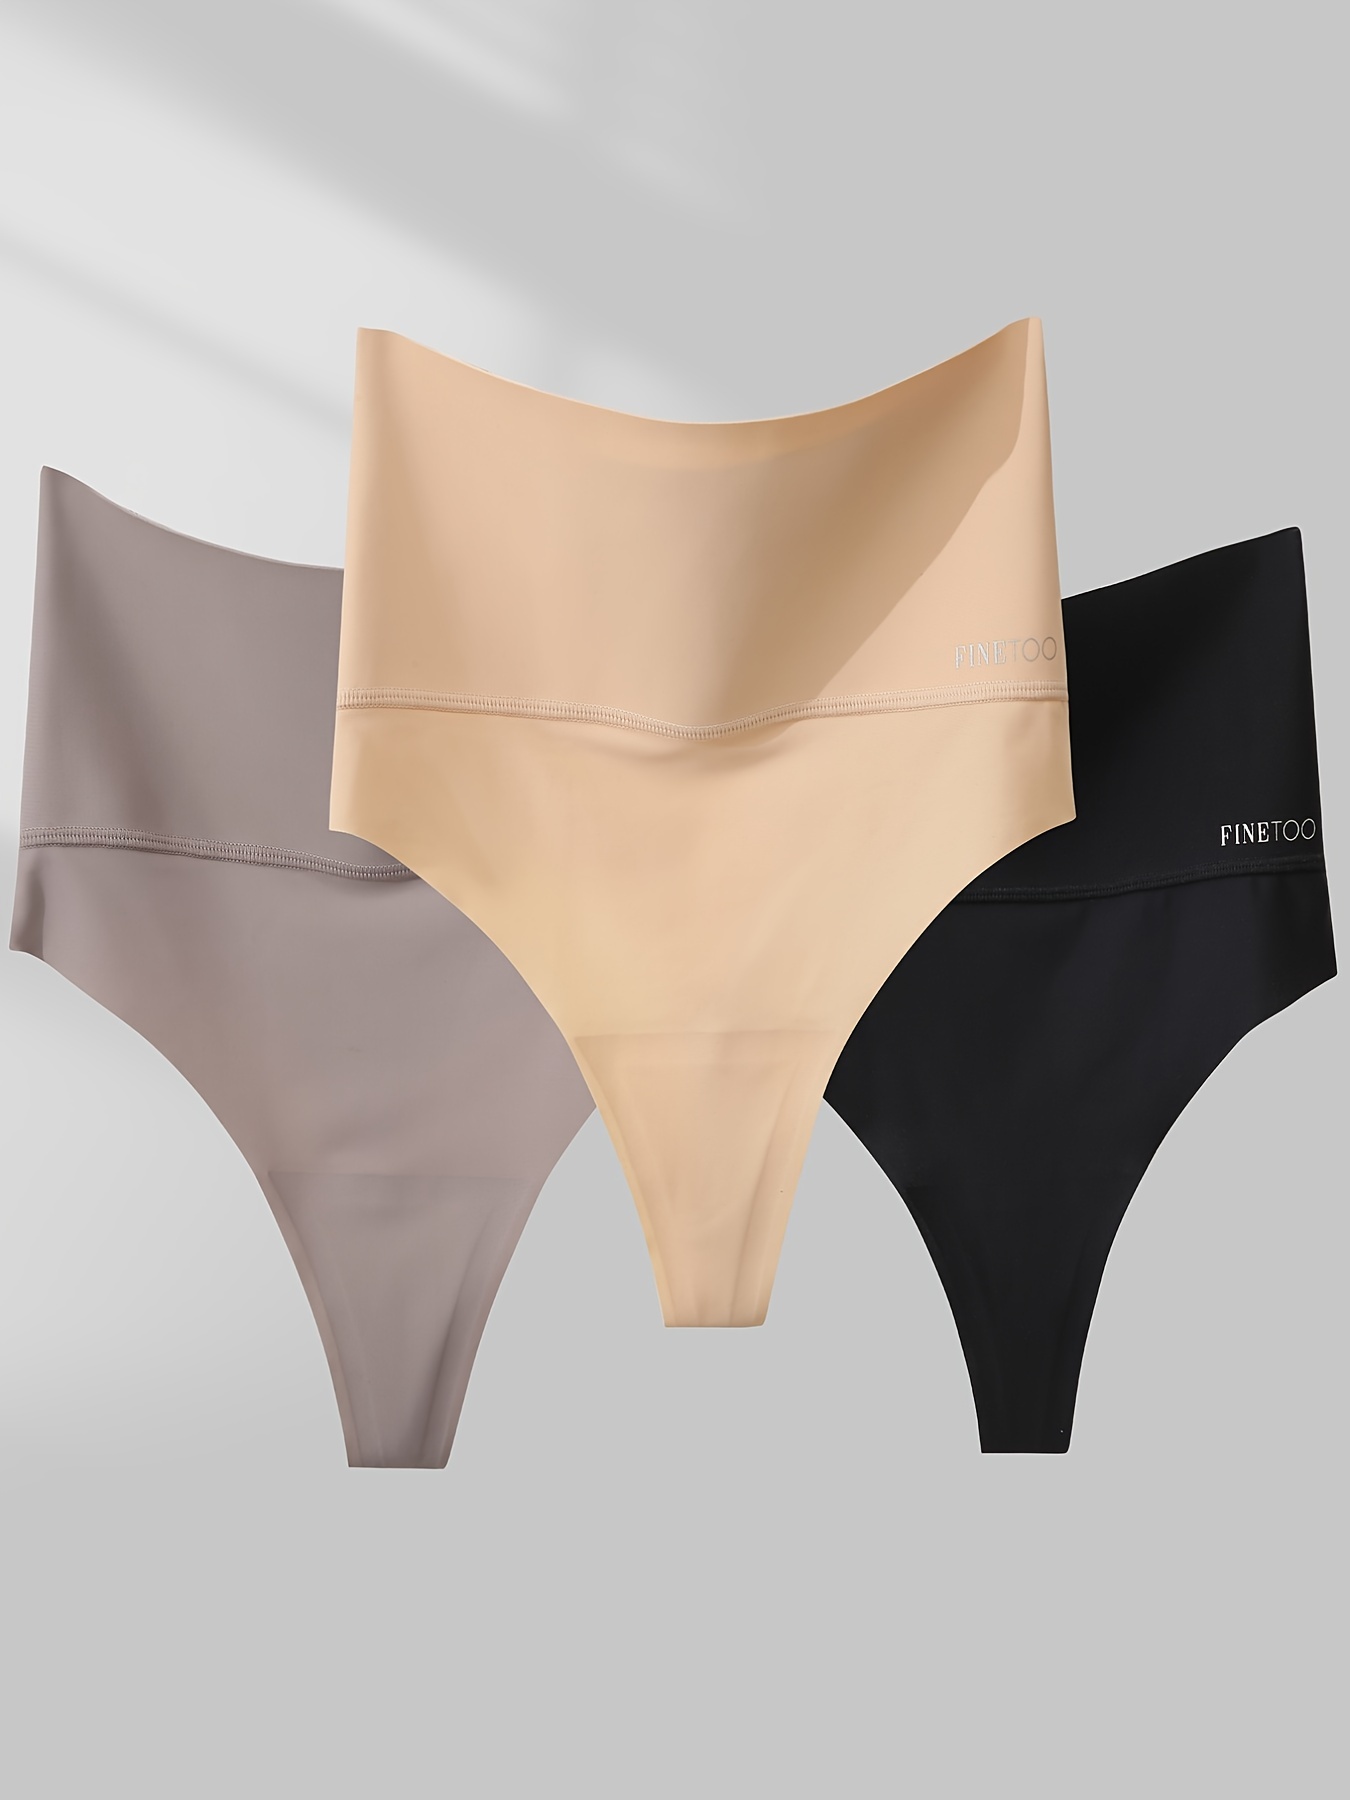 Finetoo Mesh G String Panties Women Cross Waist Underwear Women Thongs Female  Underpants Pantys Lingerie 3pcsset size S Color set 6